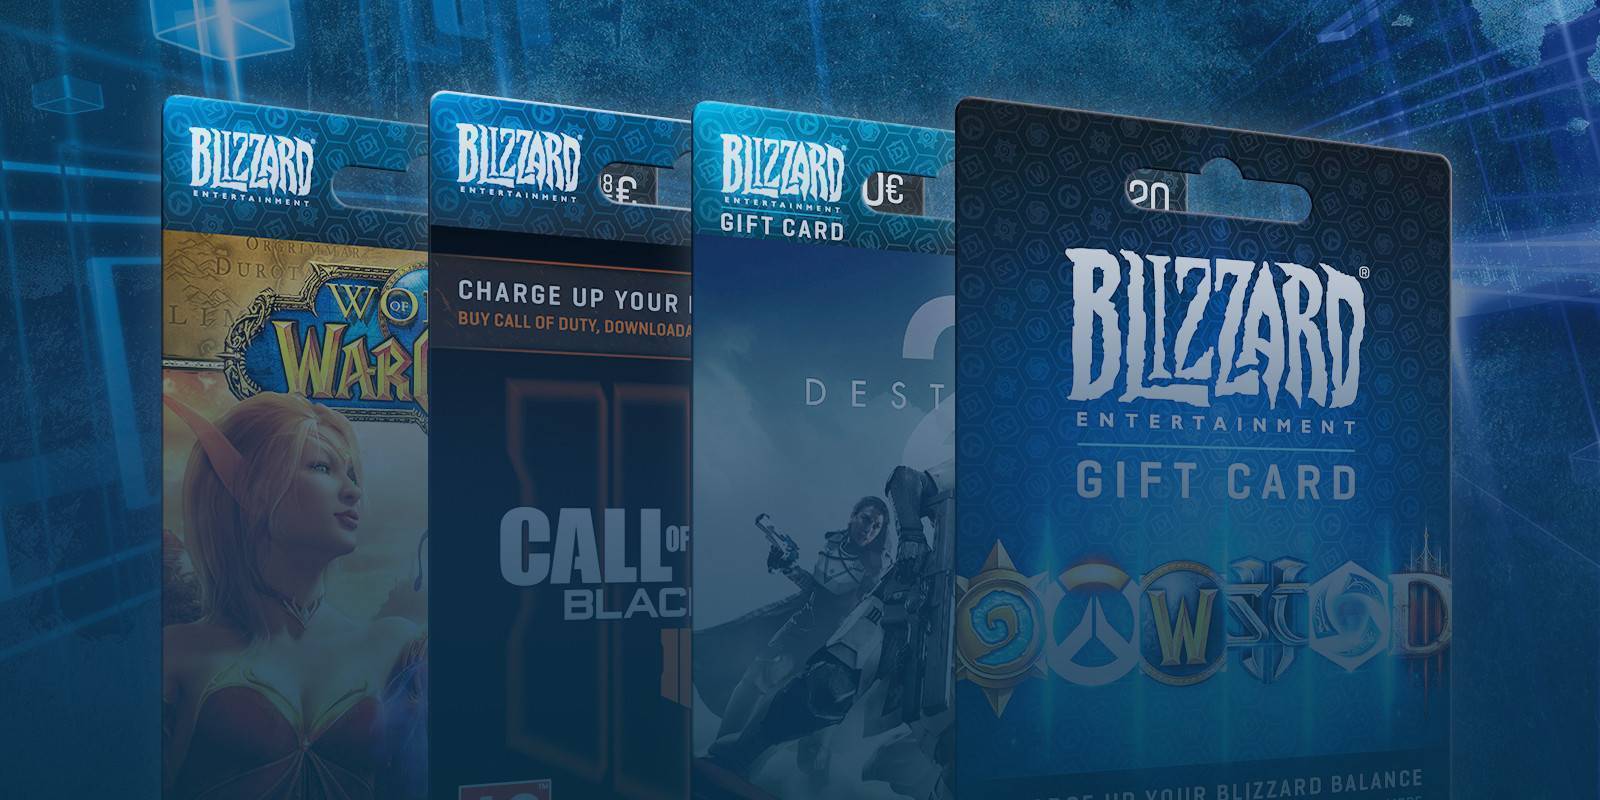 Buy Blizzard/BattleNet Gift Card - Get Instant Email Delivery!